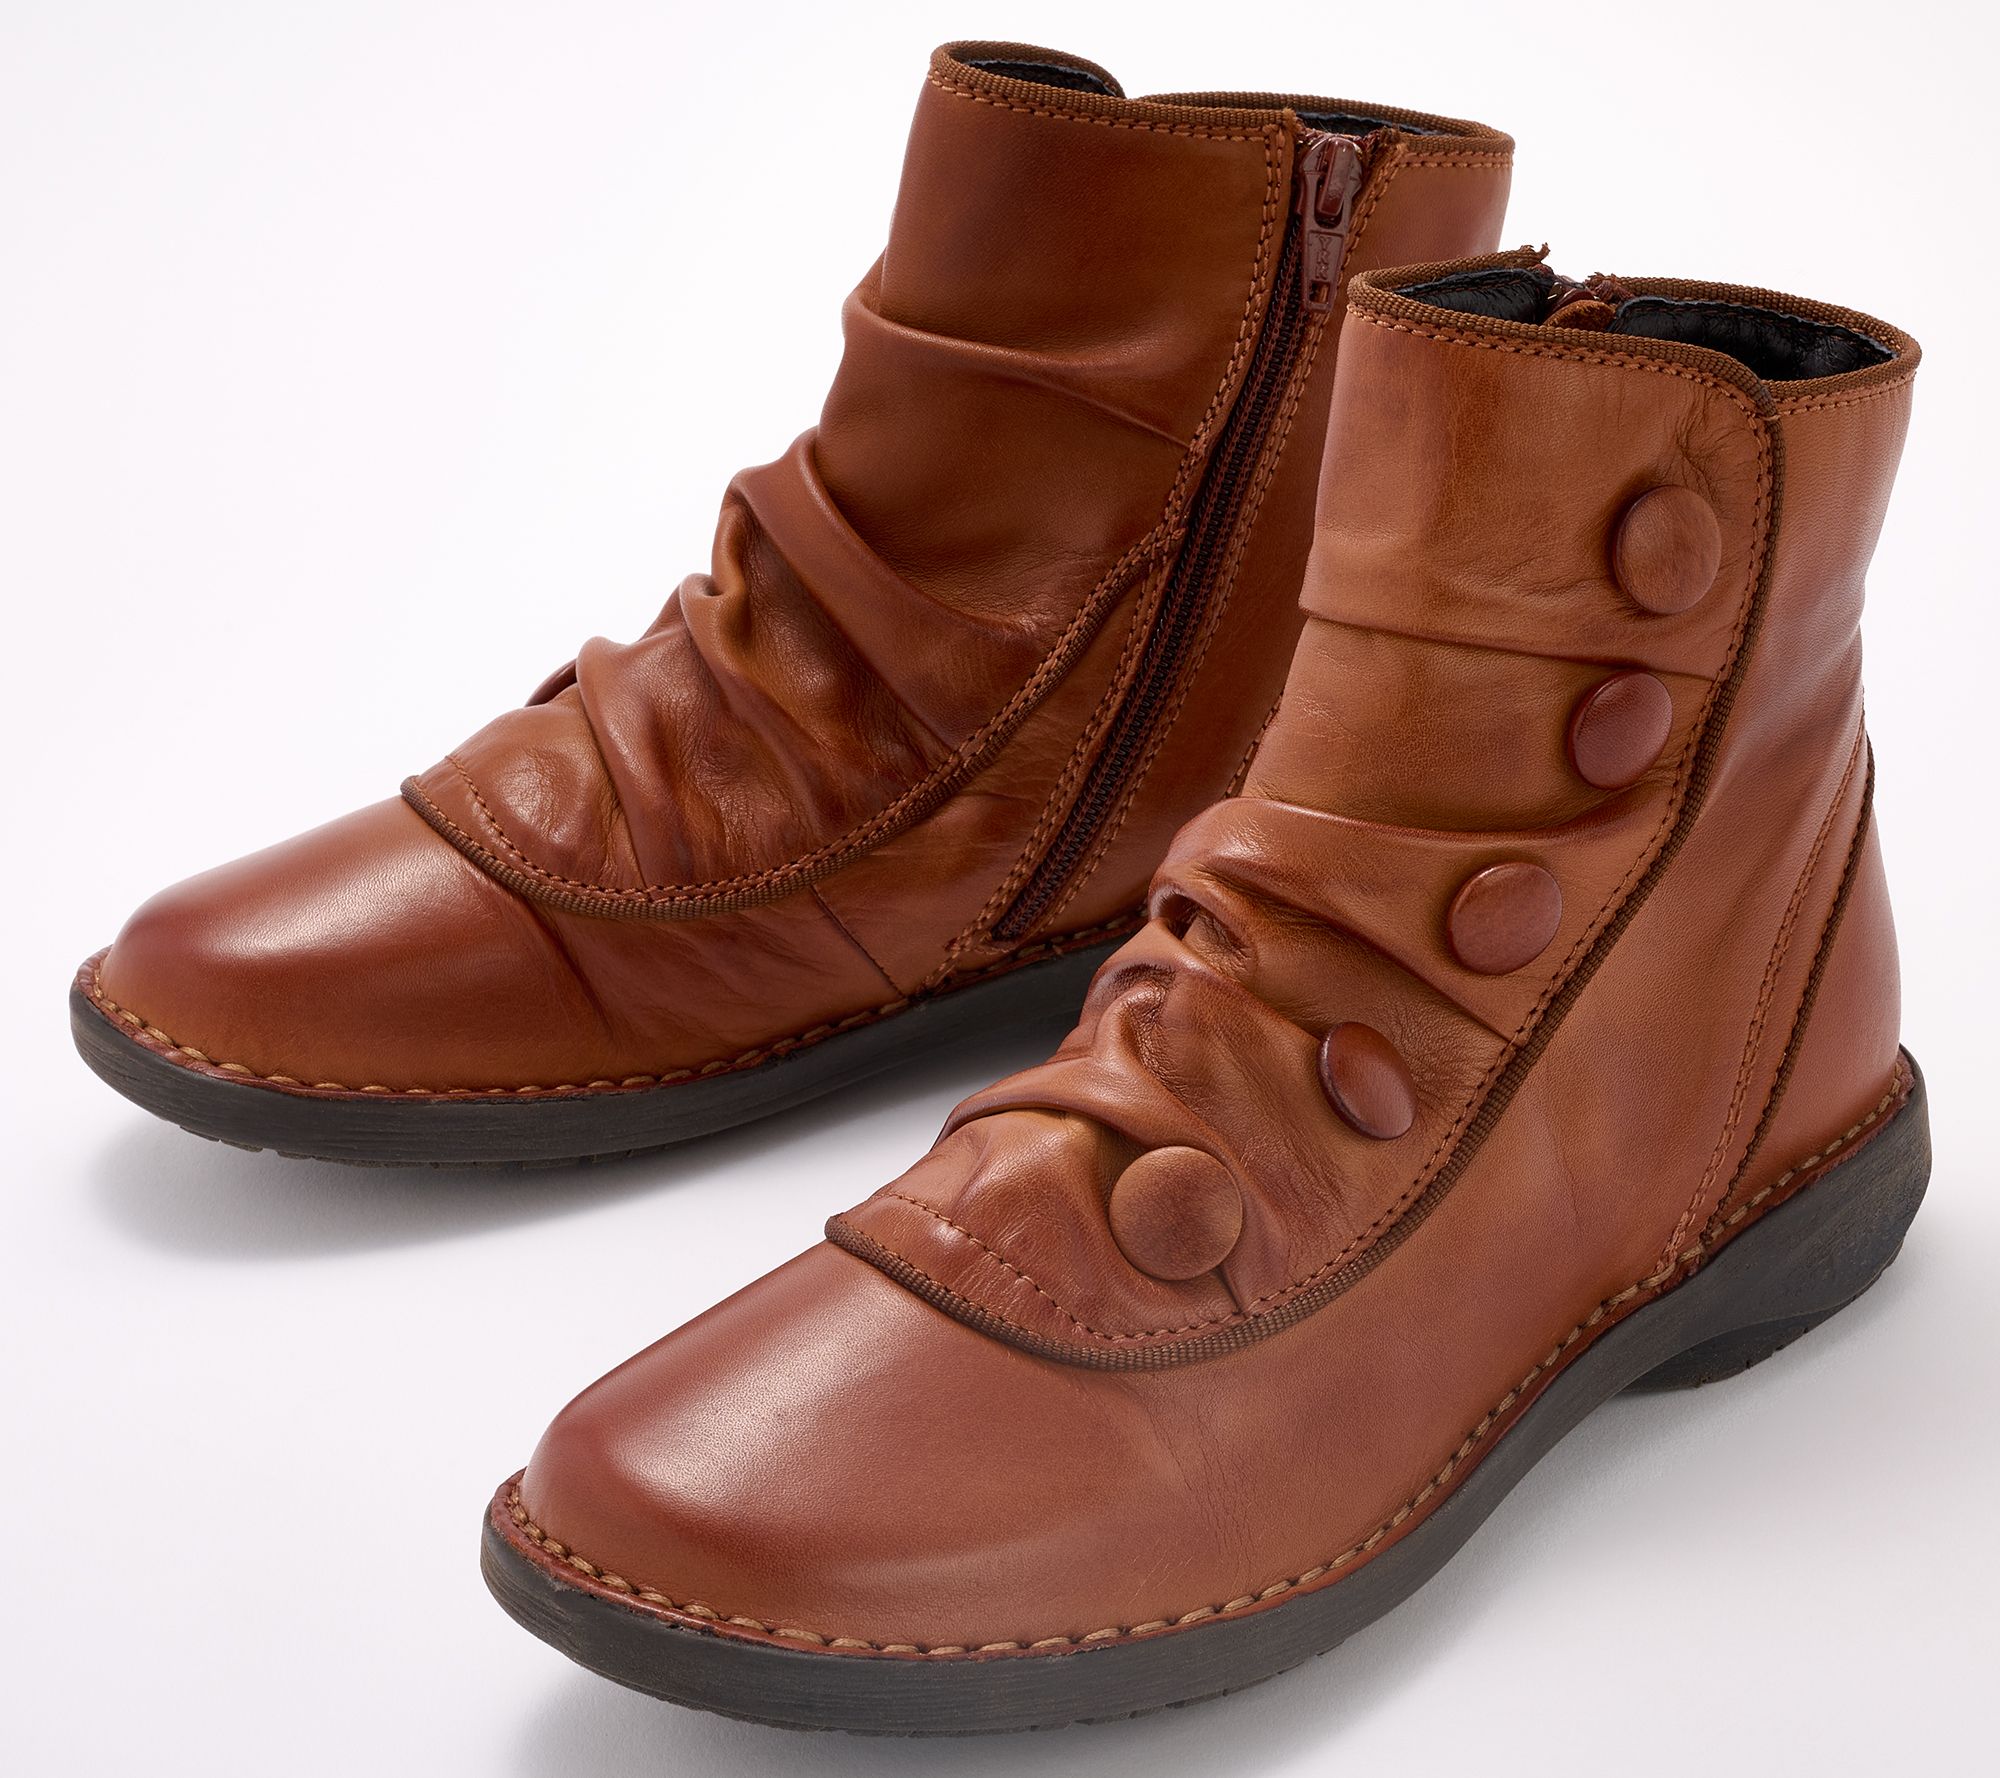 Miz Mooz Leather Buttoned Ankle Boot - Pumpkin, Size EU 37(US 6.5-7), Brandy